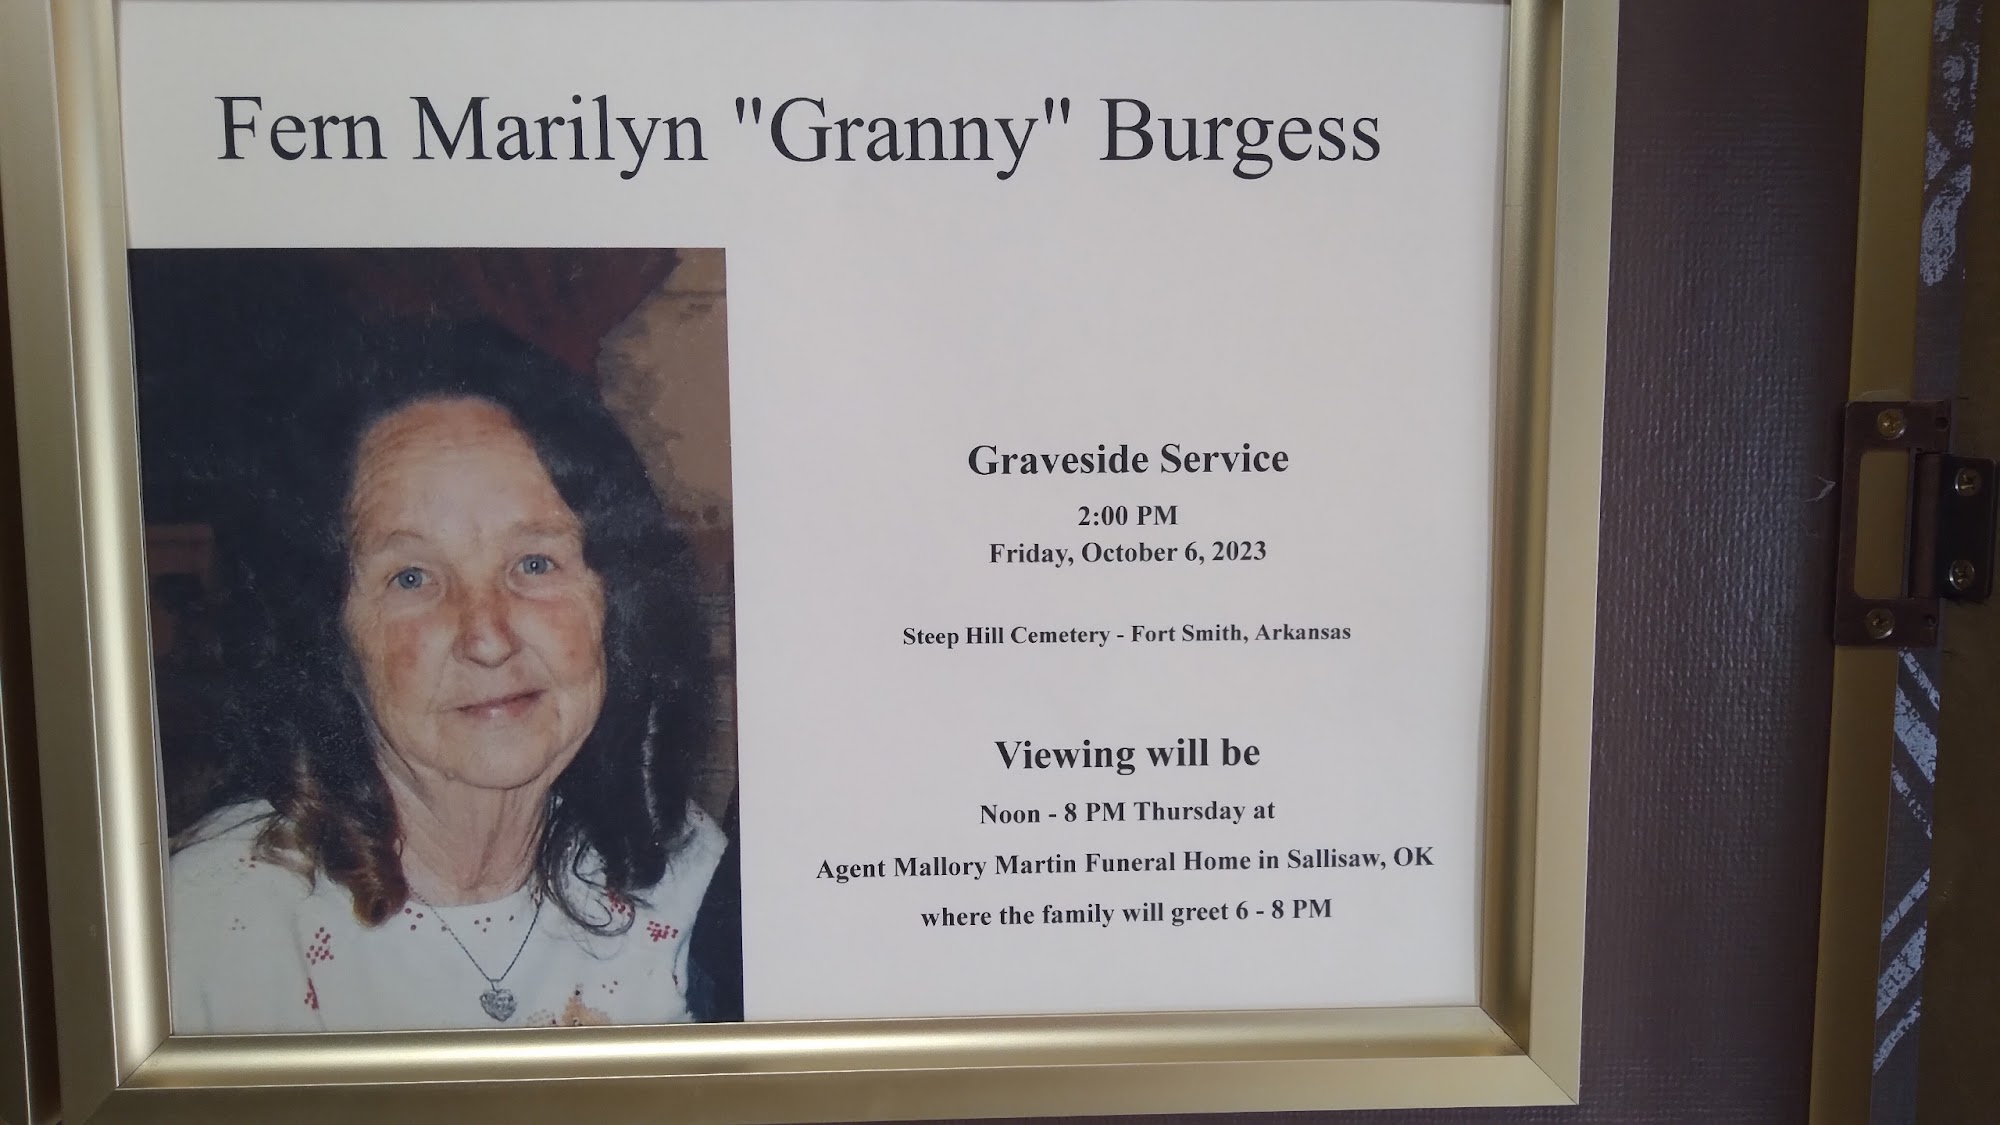 Agent & Mallory Martin Funeral Home 123 S Wheeler Ave, Sallisaw Oklahoma 74955